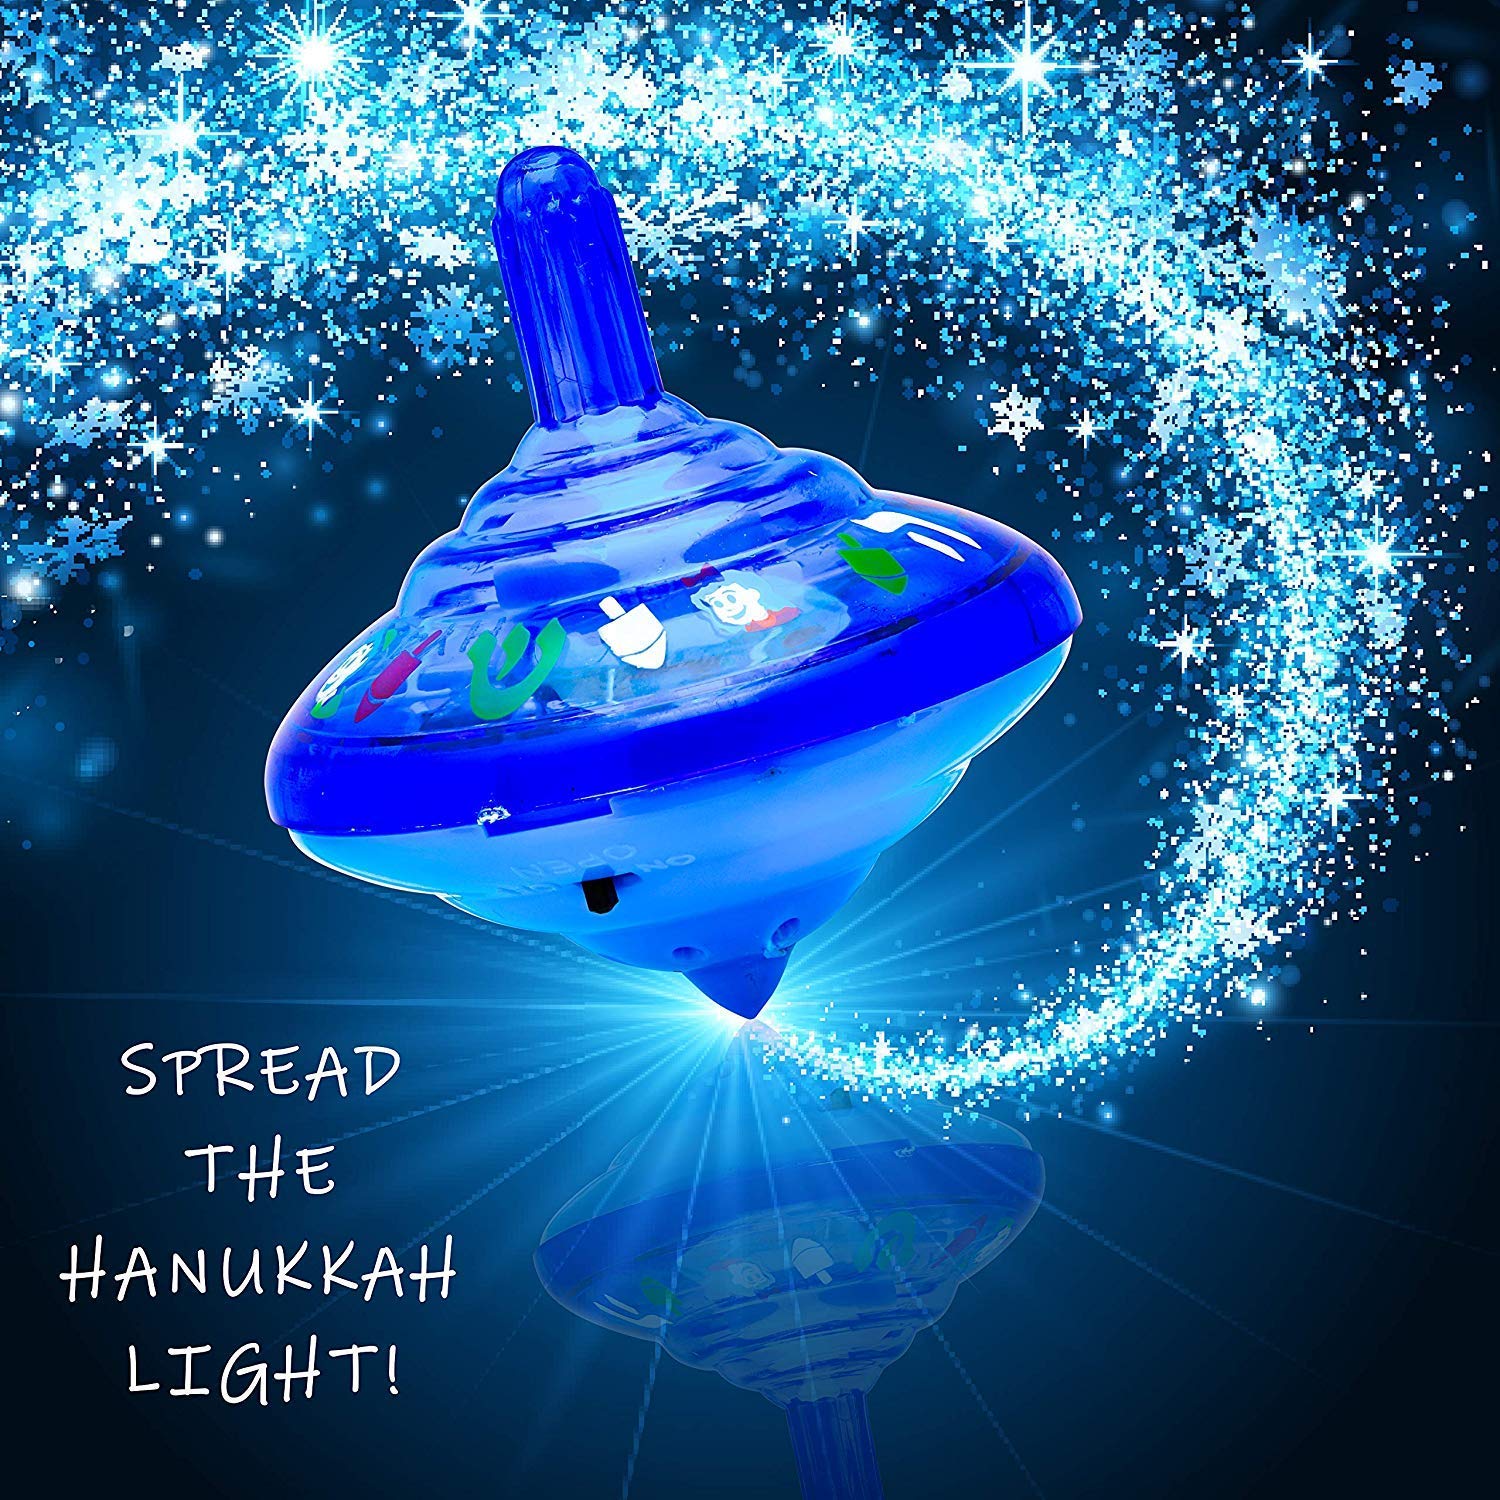 Hanukkah Musical Light-Up Dreidel Spinning Tops Set, Plays 2 Classic Hanukkah Songs, Assorted Colors (2-Pack)